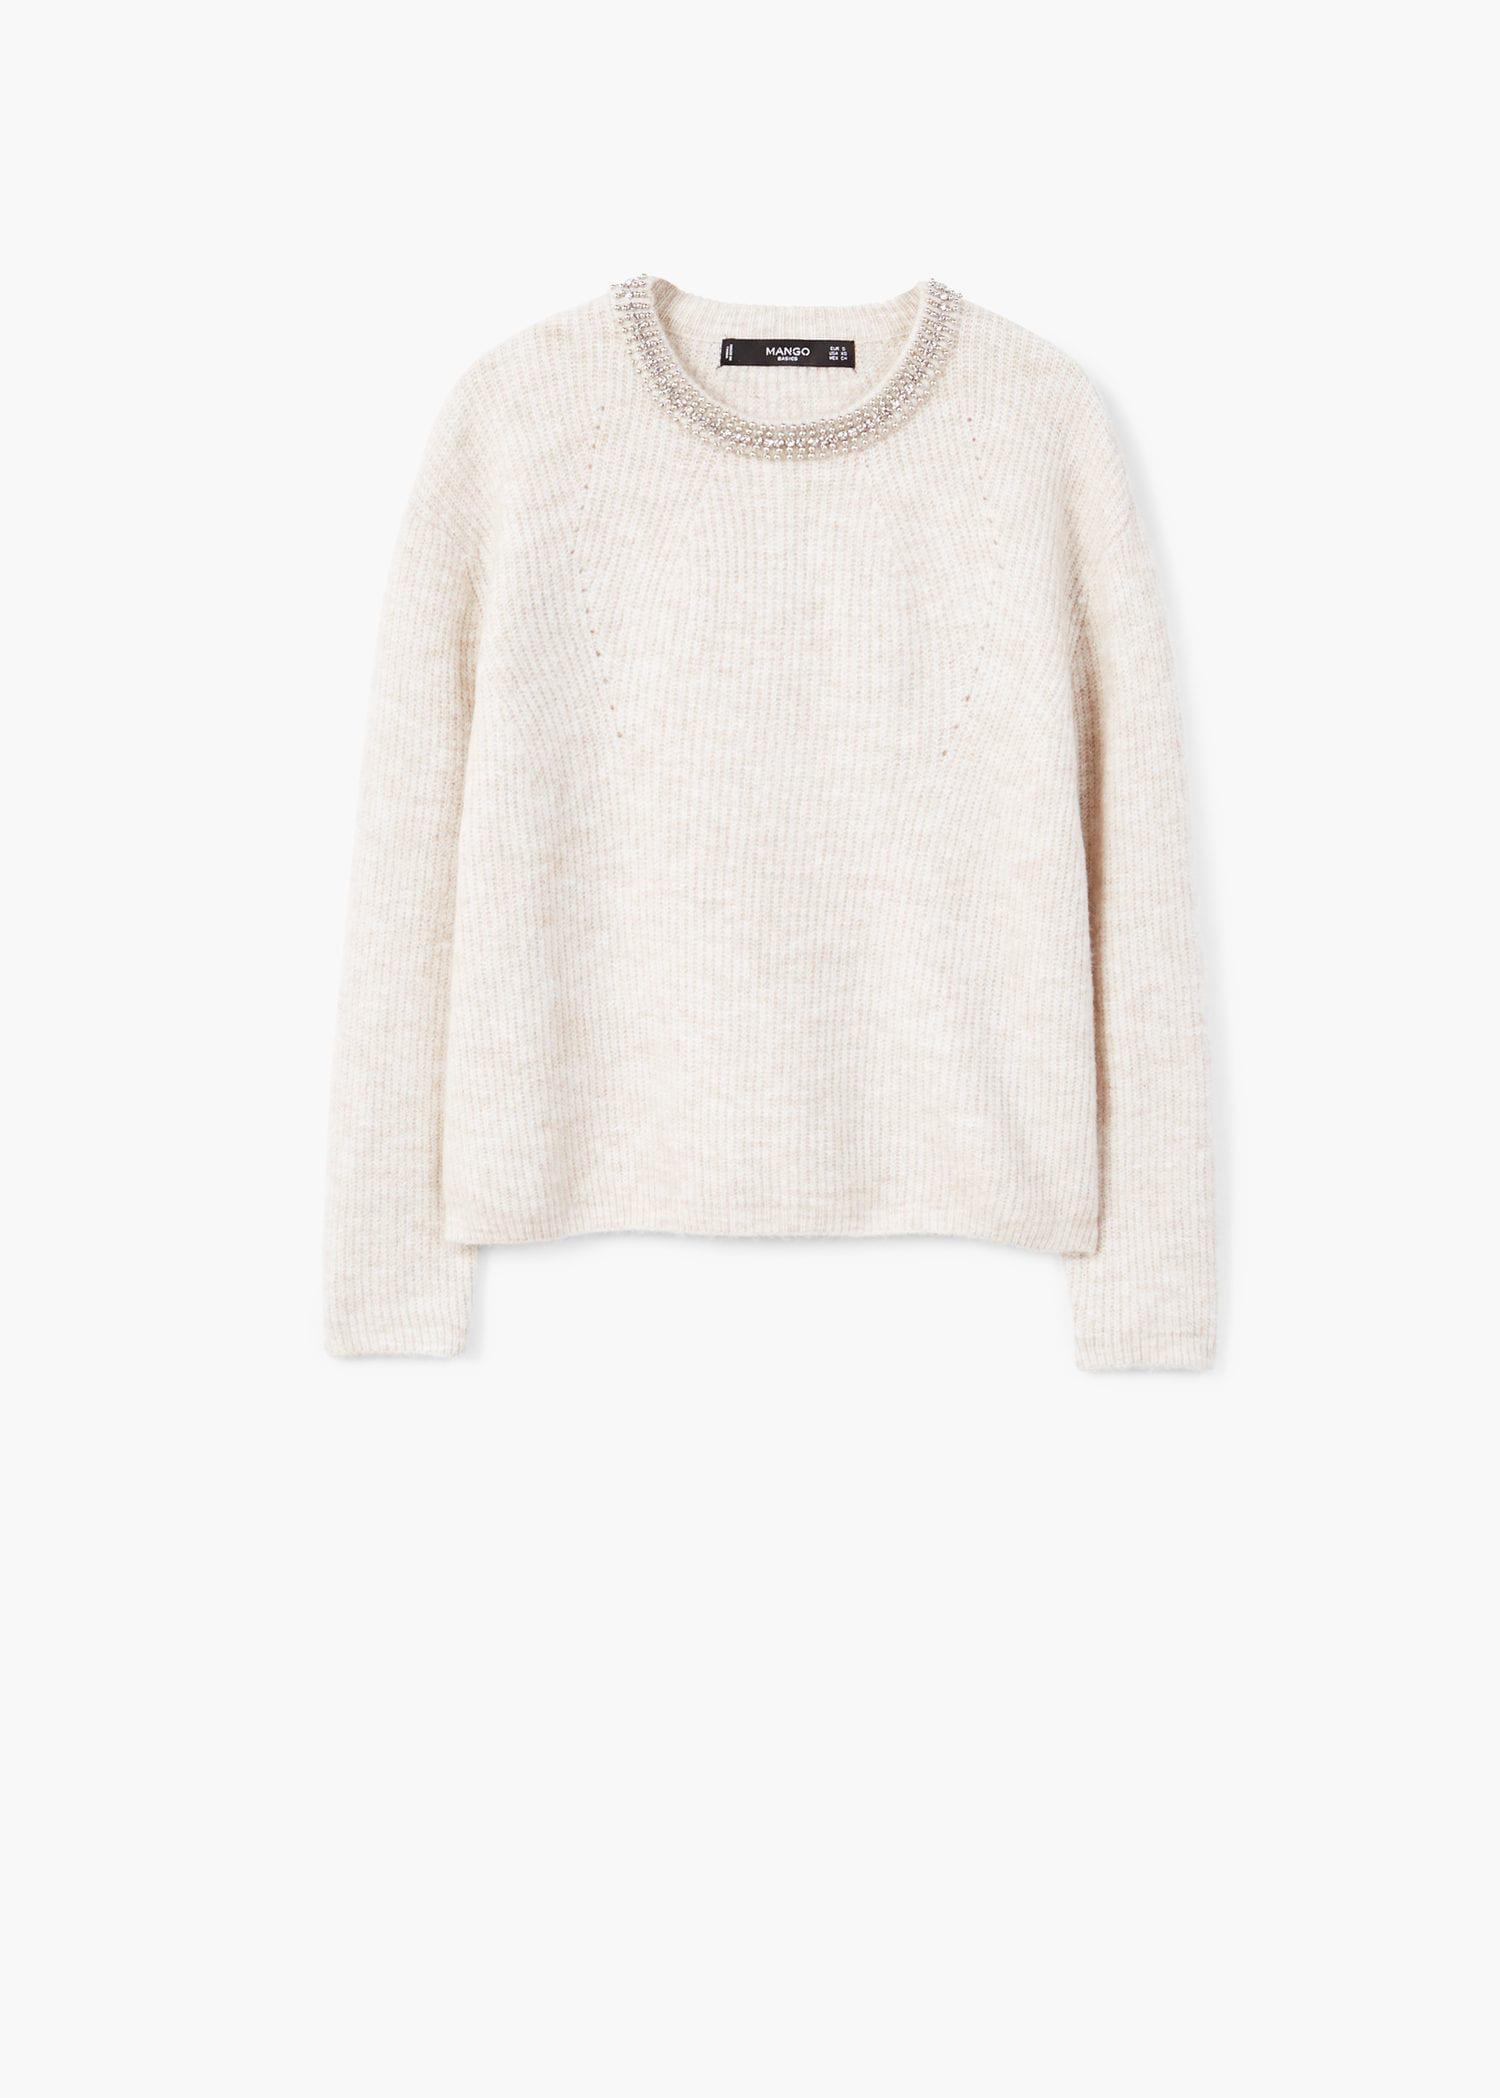 Lyst - Mango Pearls Neckline Sweater in Gray